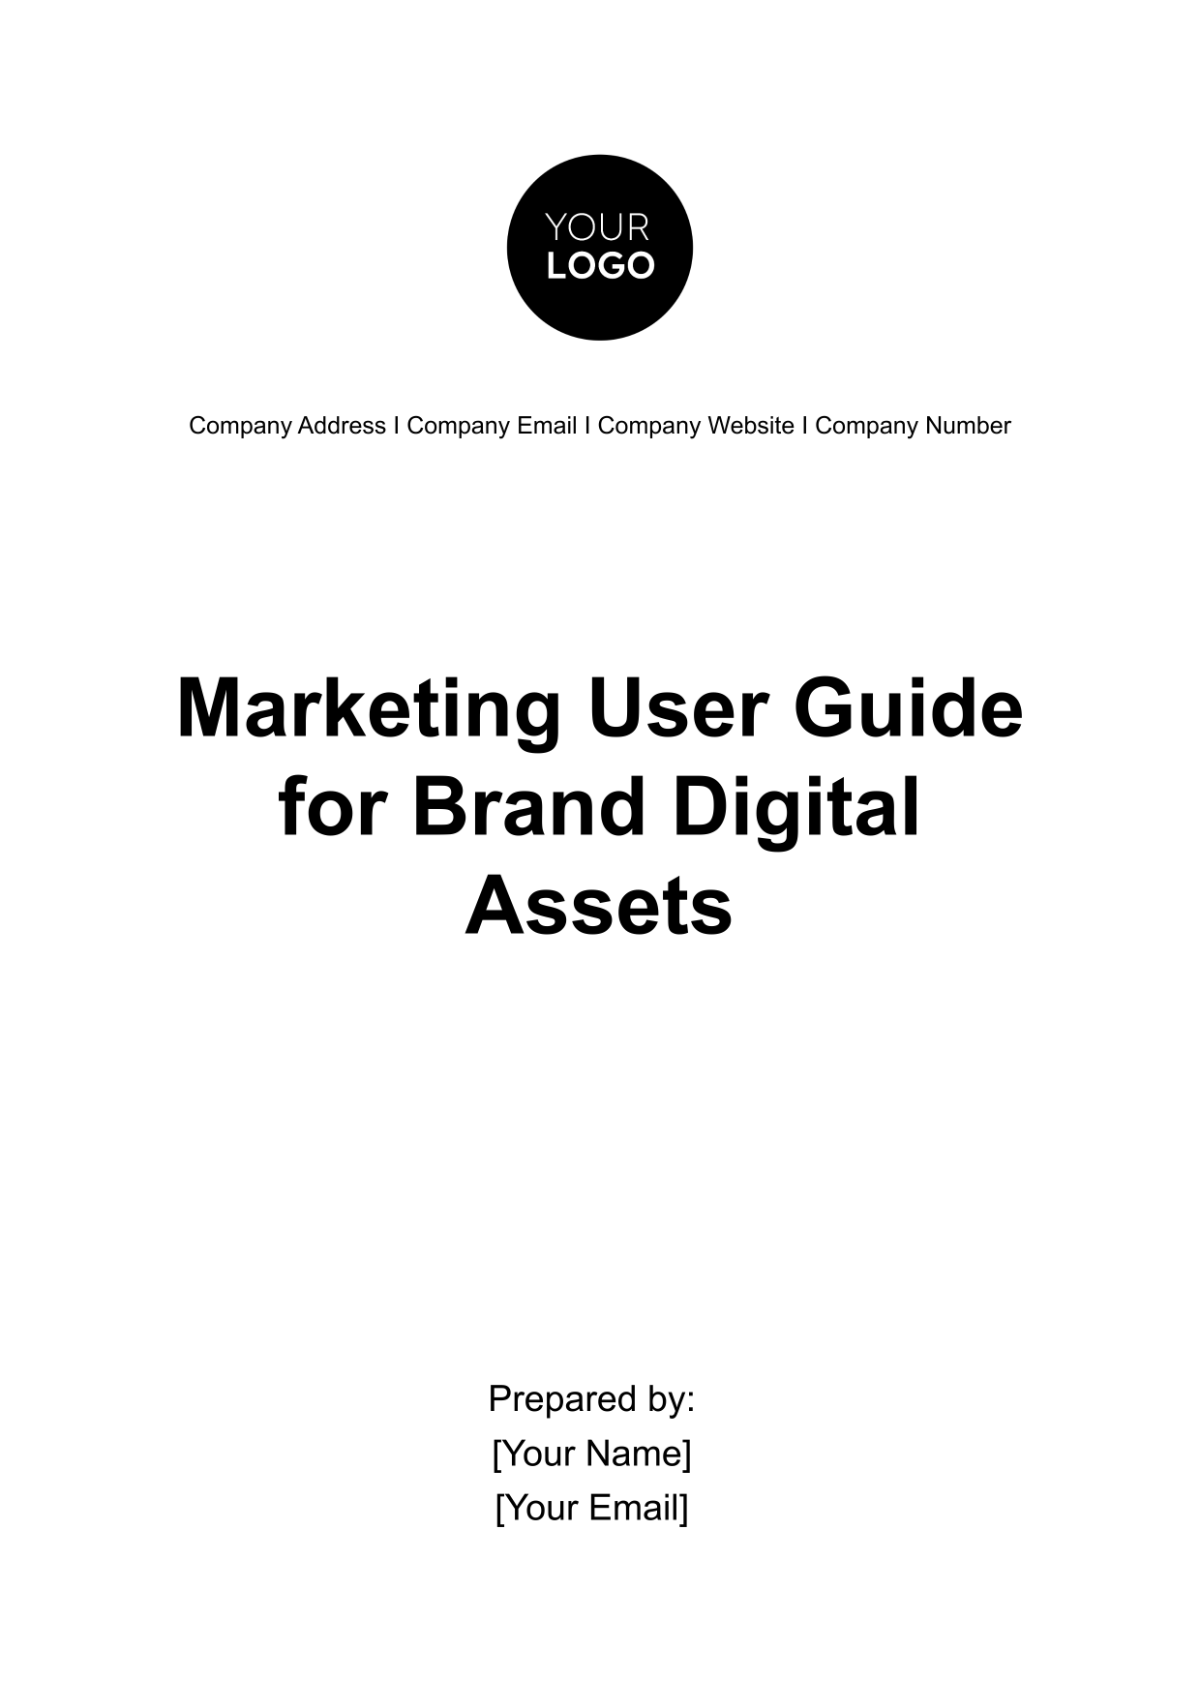 Marketing User Guide for Brand Digital Assets Template